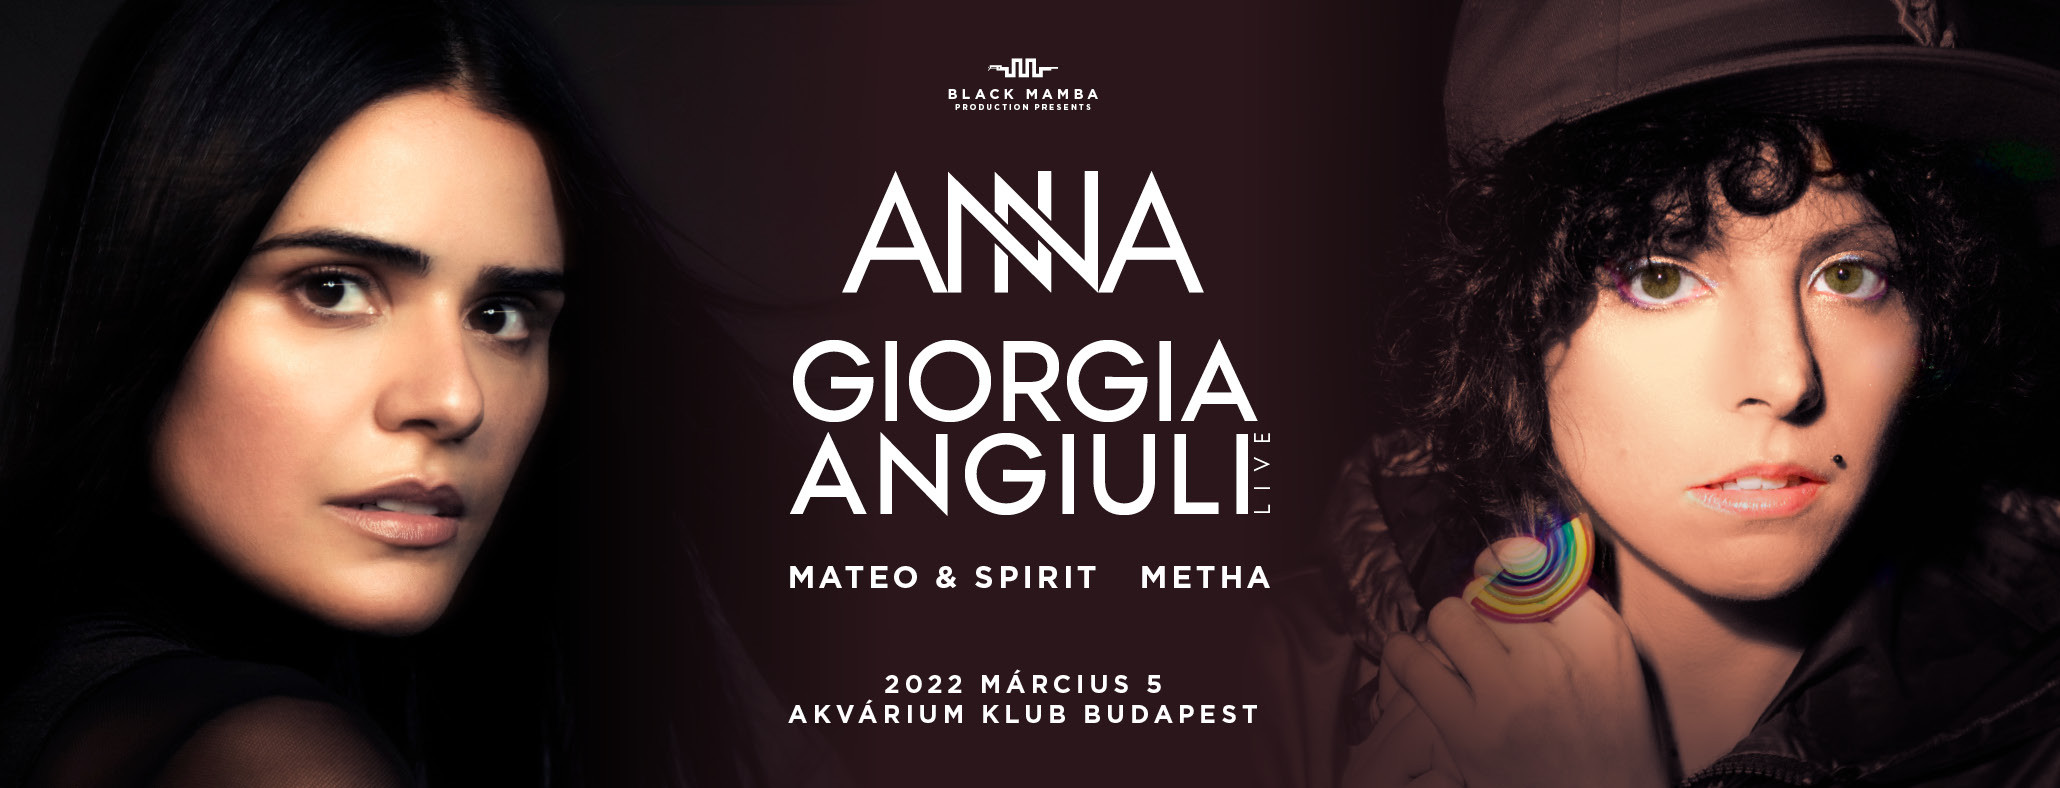 ANNA / GIORGIA ANGIULI live AT AKVARIUM KLUB